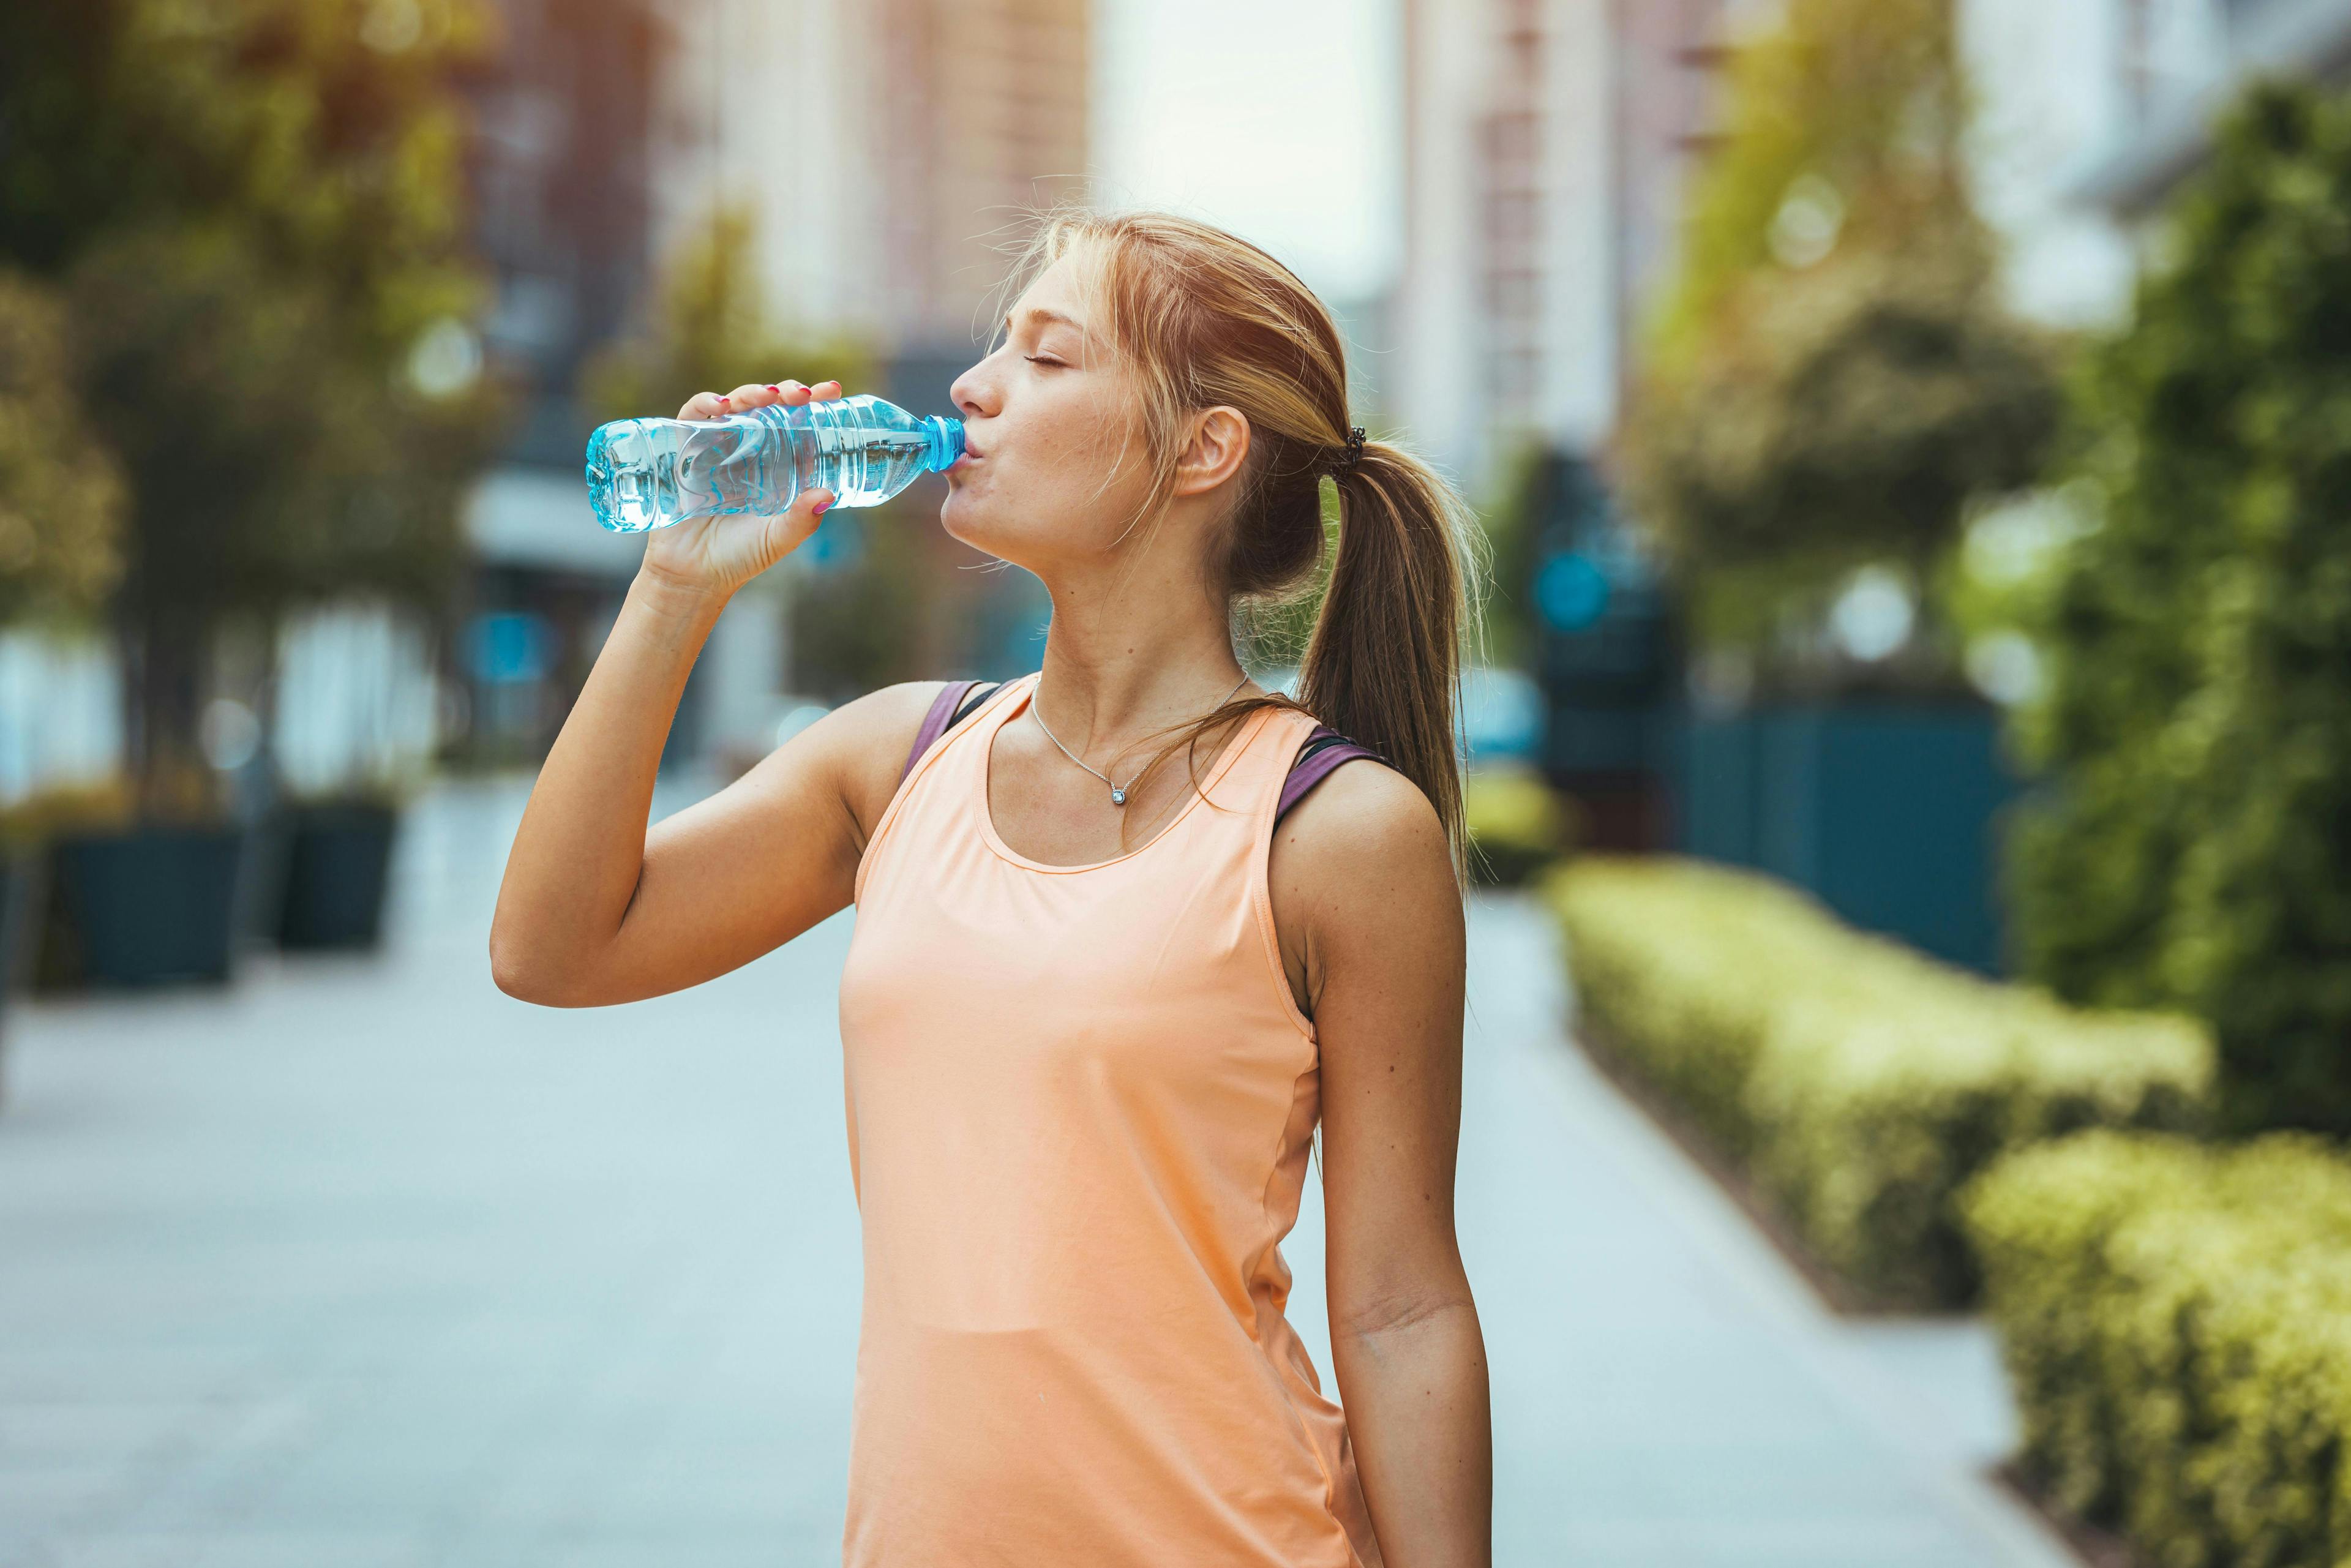 Woman Drinks Water from Plastic Bottle